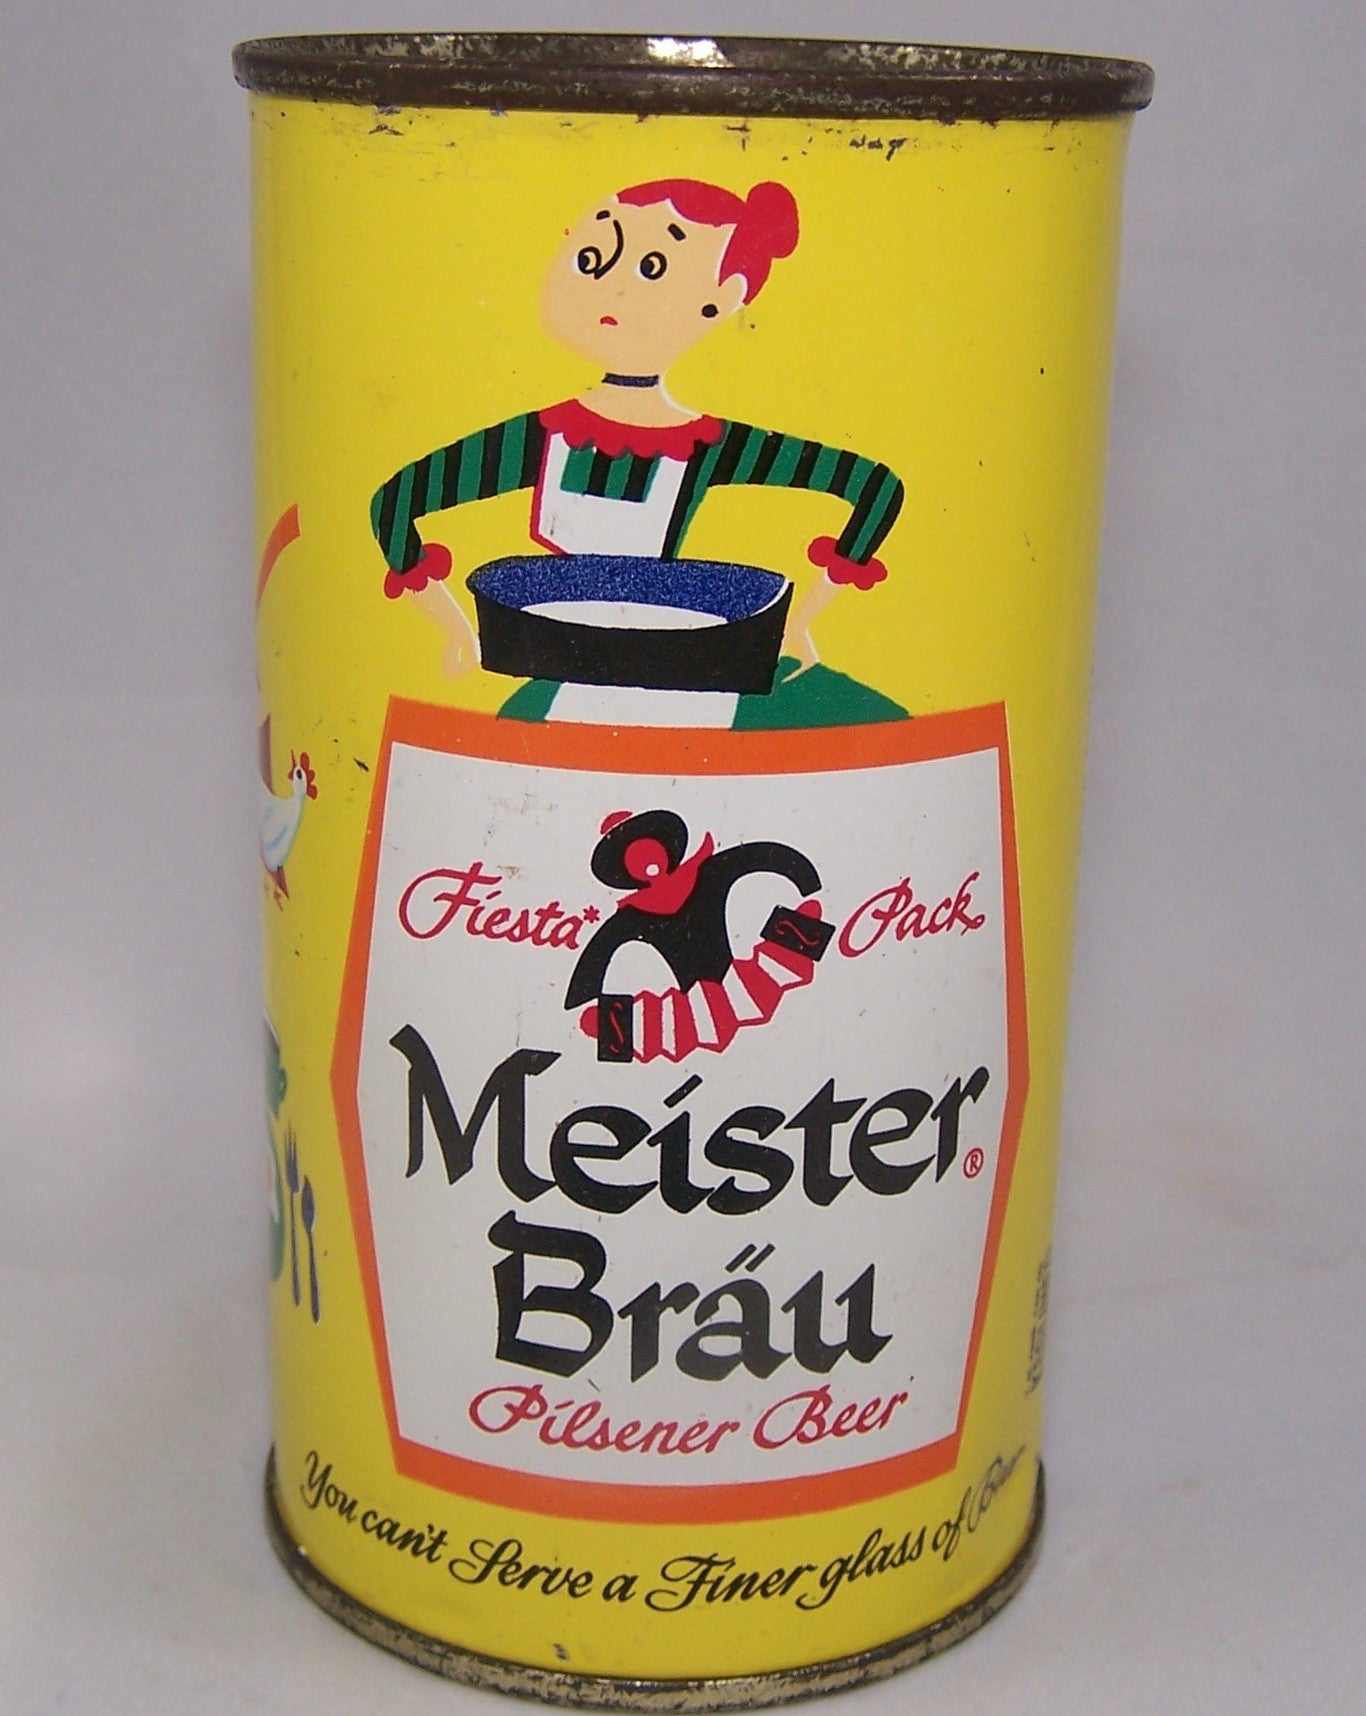 Meister Brau Pilsener Beer, USBC 98-1, Grade 1 Sold on 7/29/15